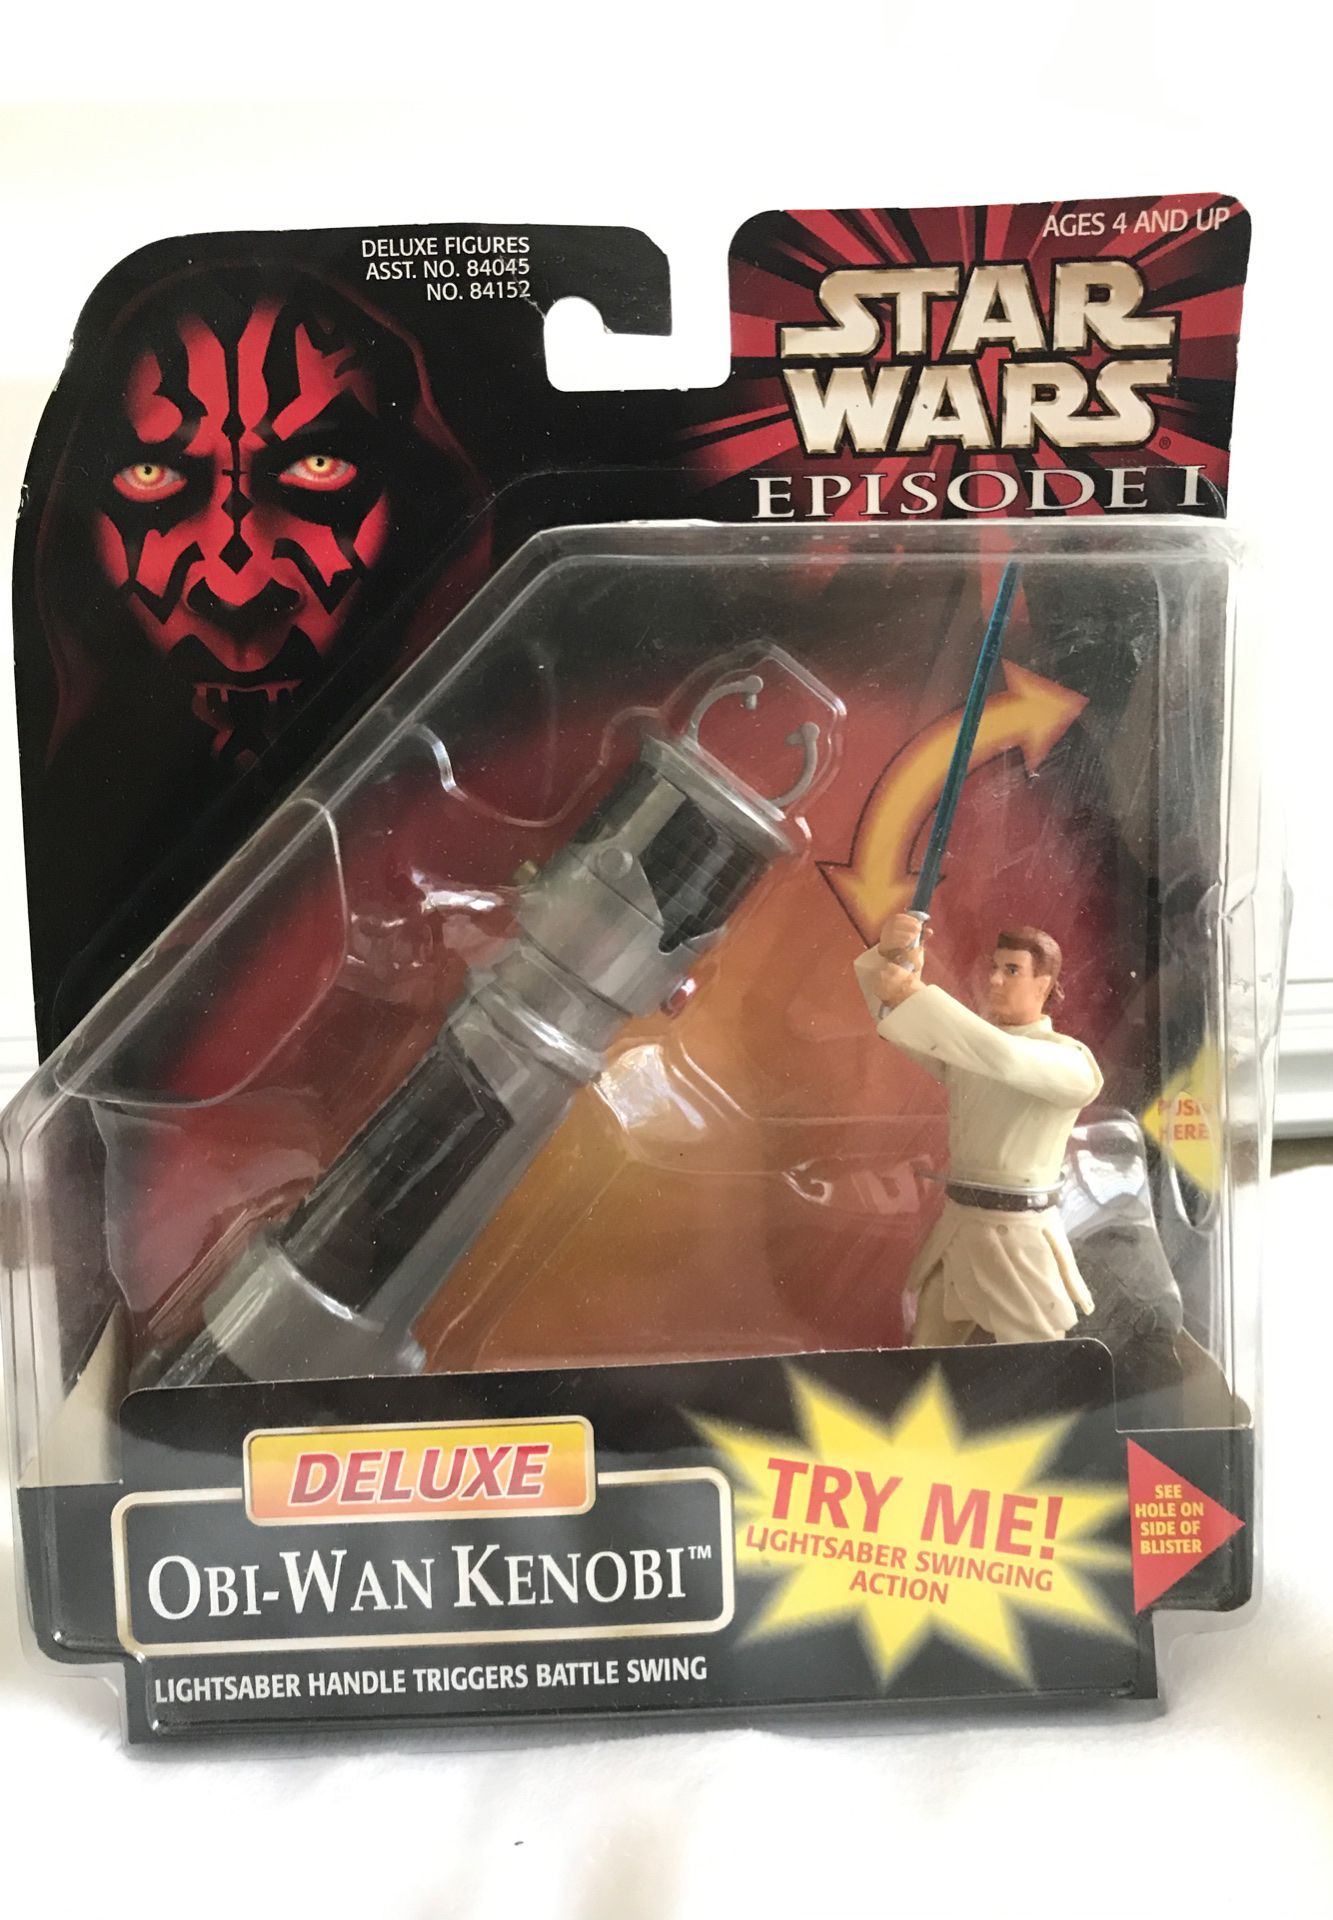 New in box - Star Wars Episode 1 - Obi-Wan Kenobi Action Figure w/ lightsaber handle